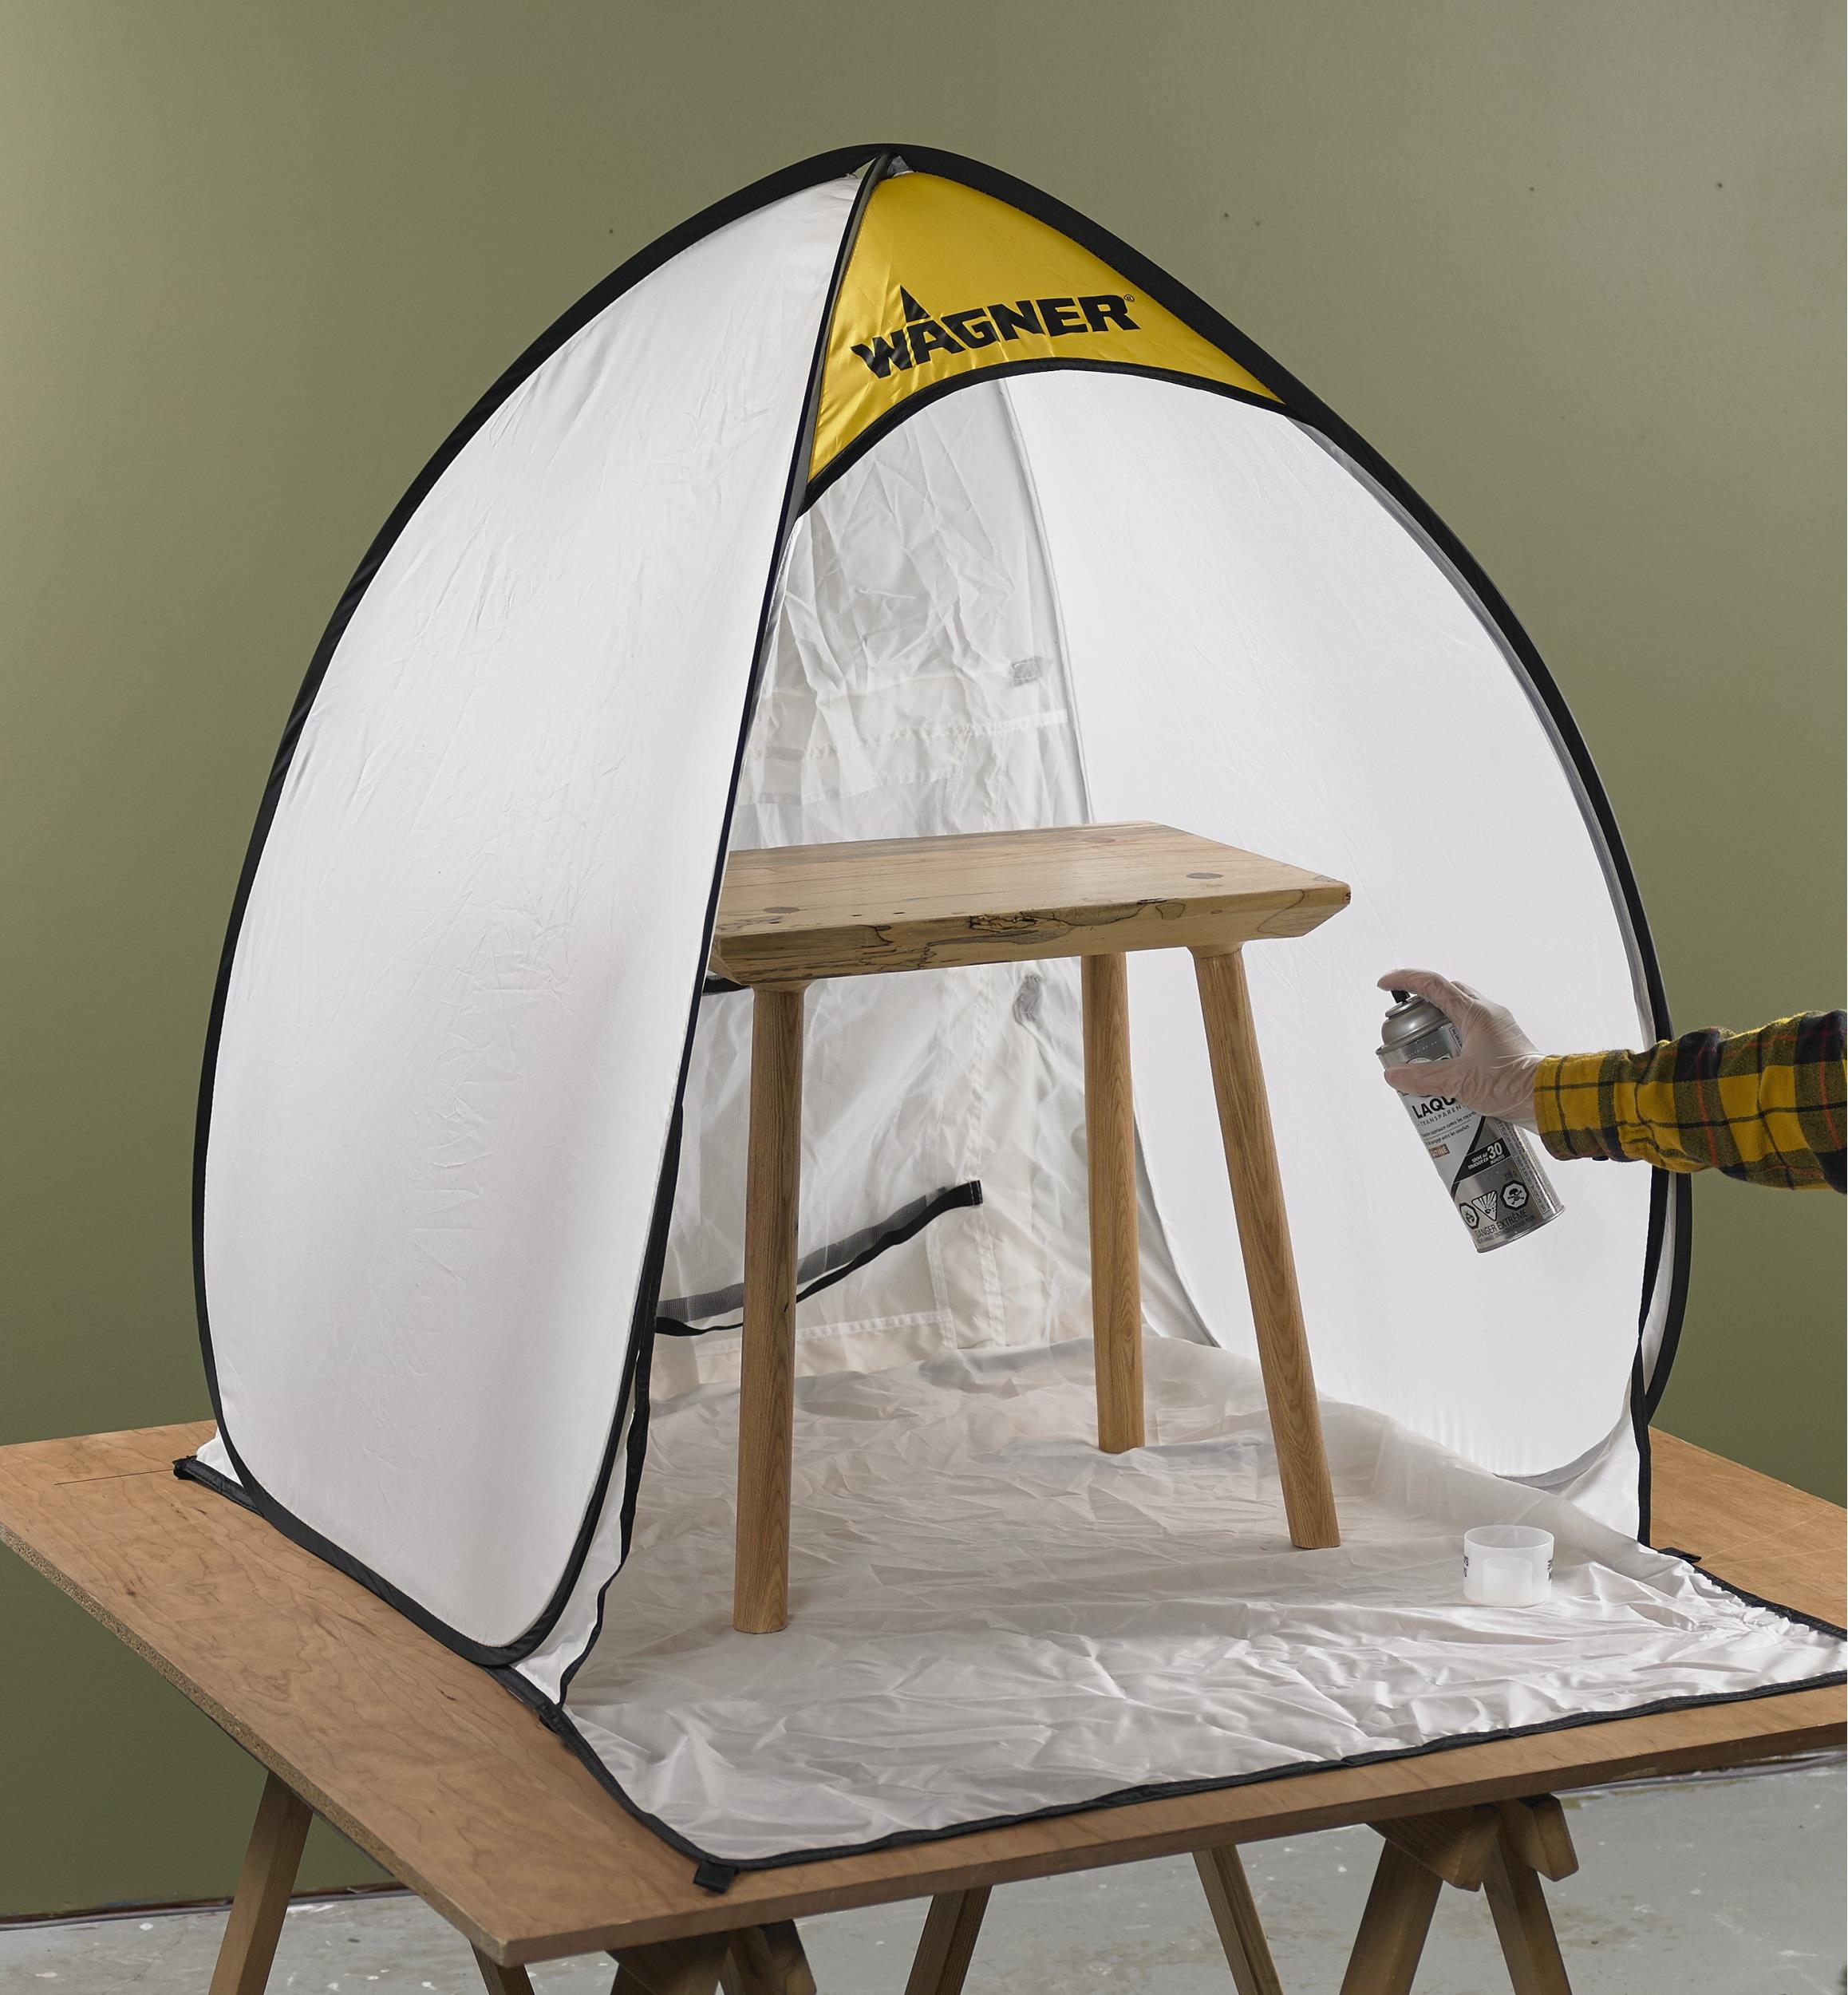 Spray painting tents? Anyone use them?